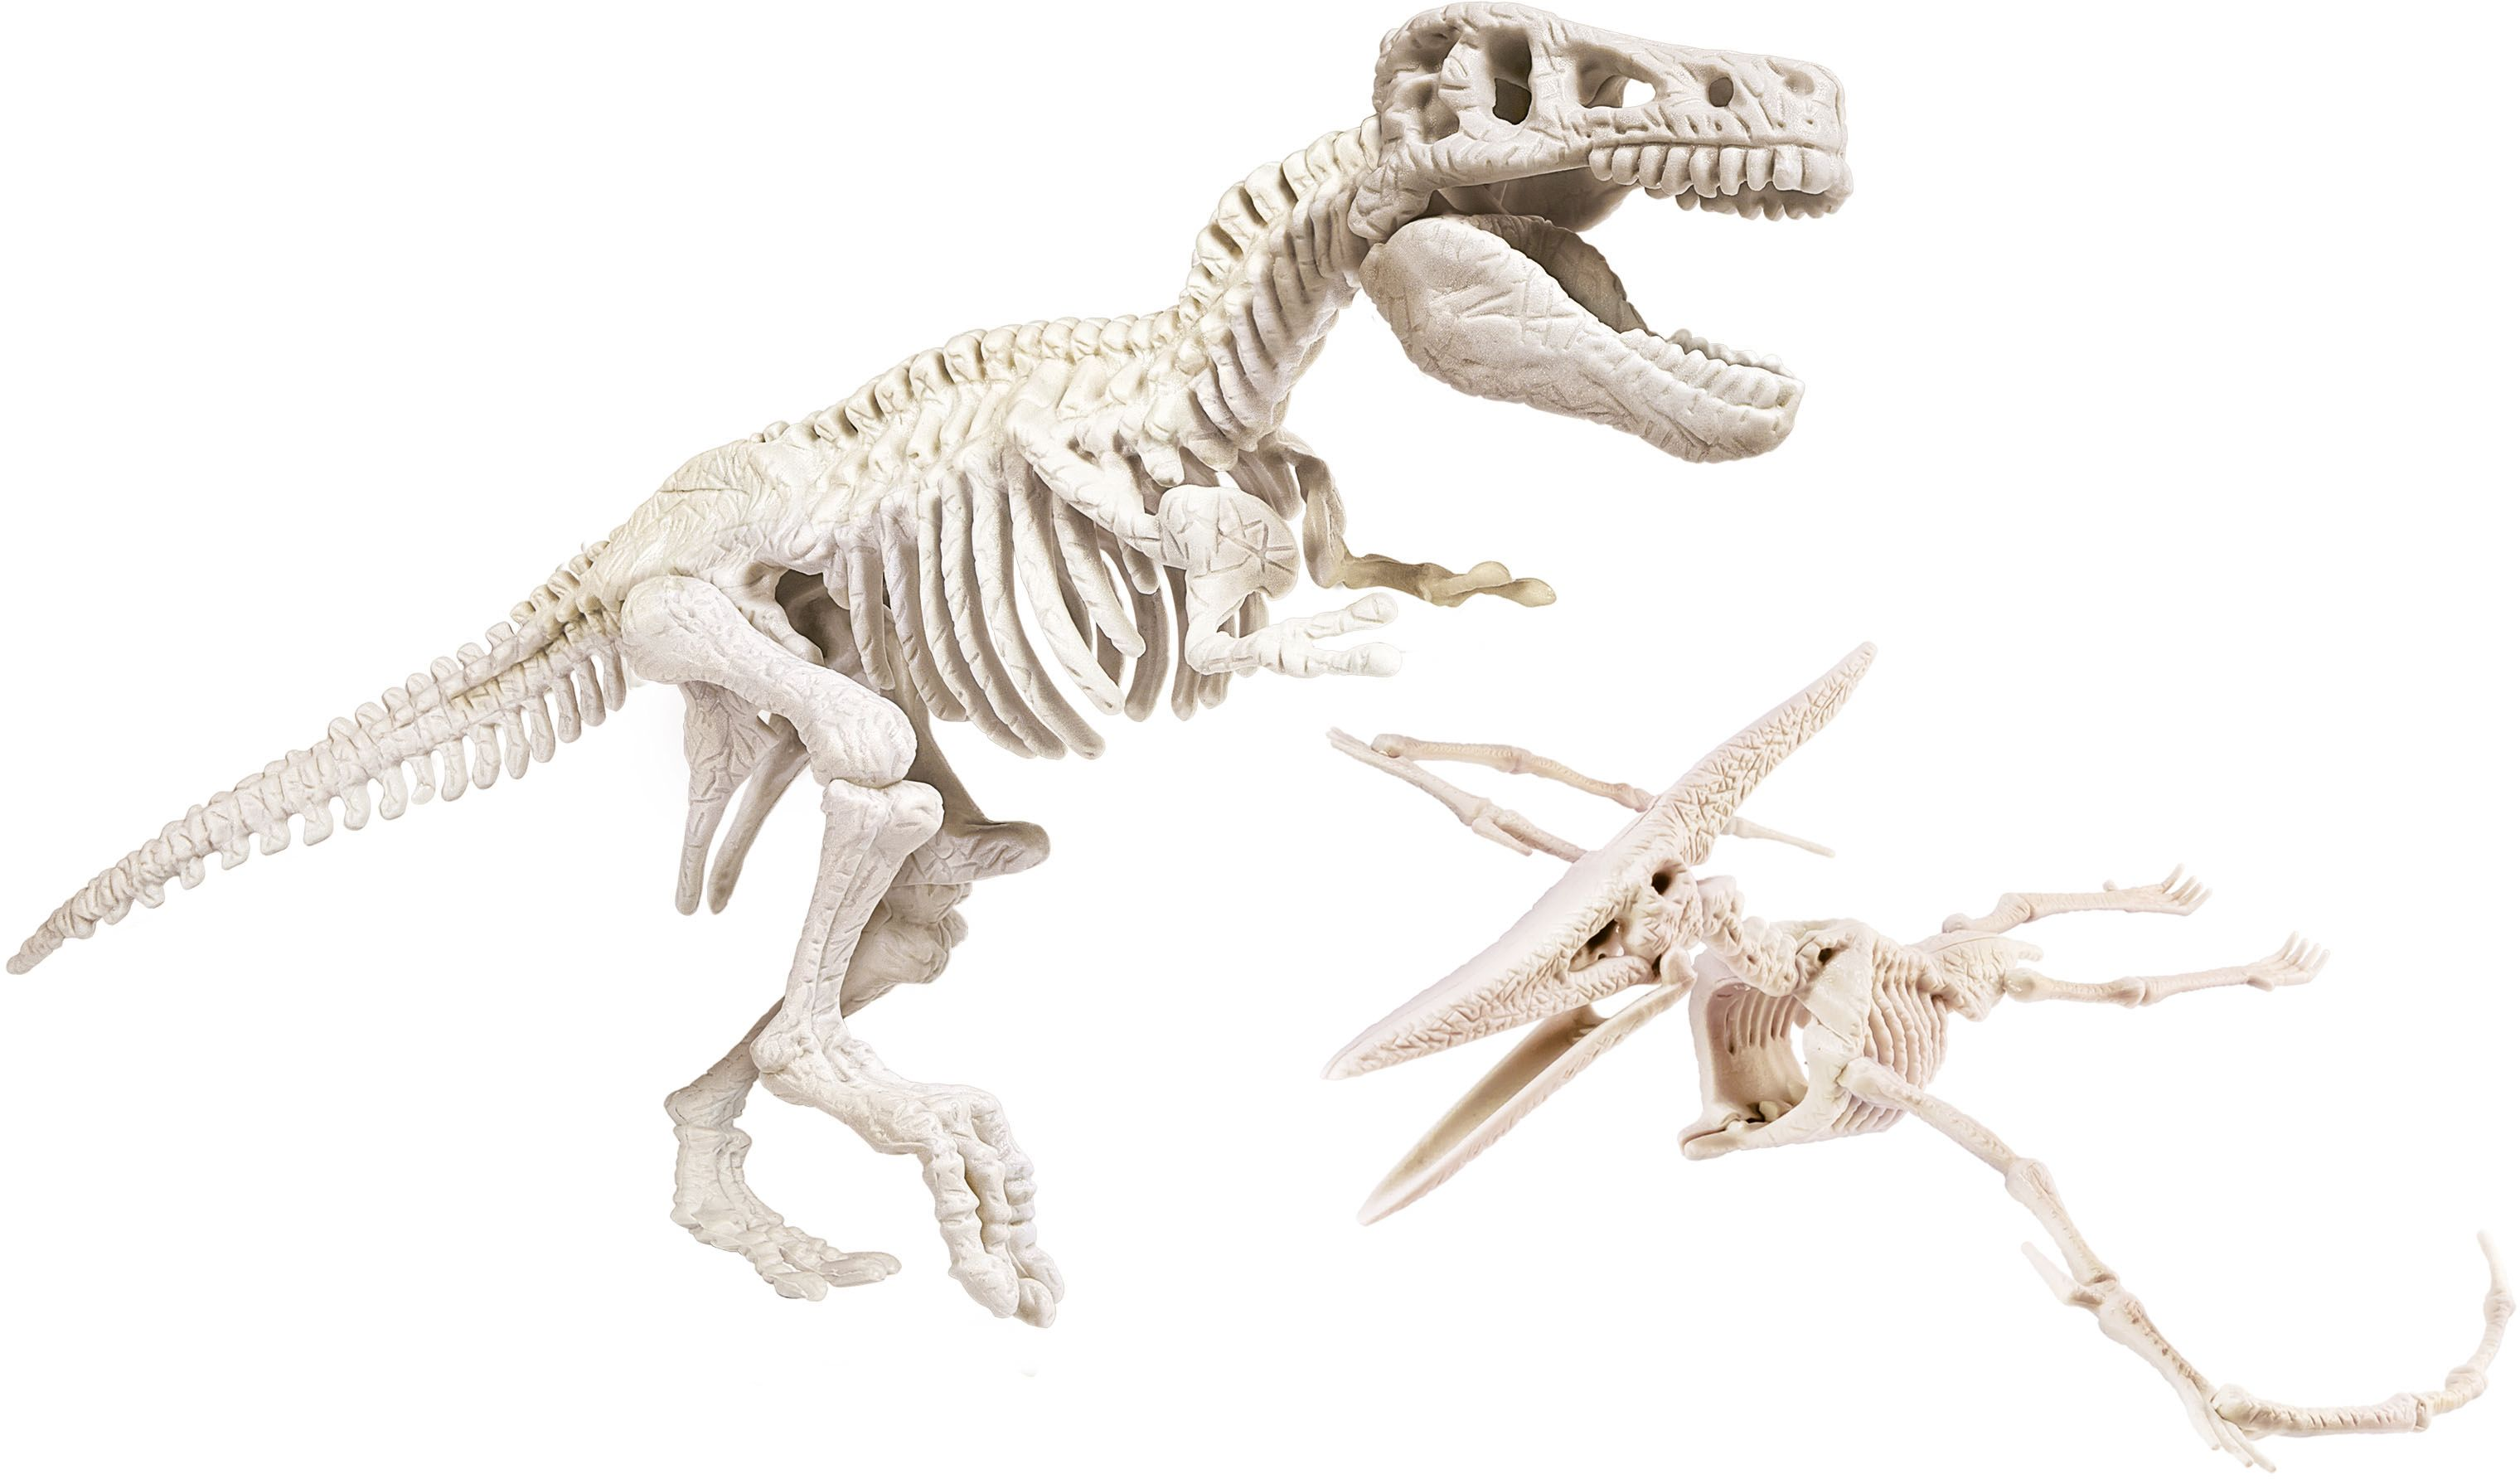 3 - & Spielset Clementoni Mehrfarbig T-Rex Ausgrabungs-Set CLEMENTONI Jurassic World Triceratops